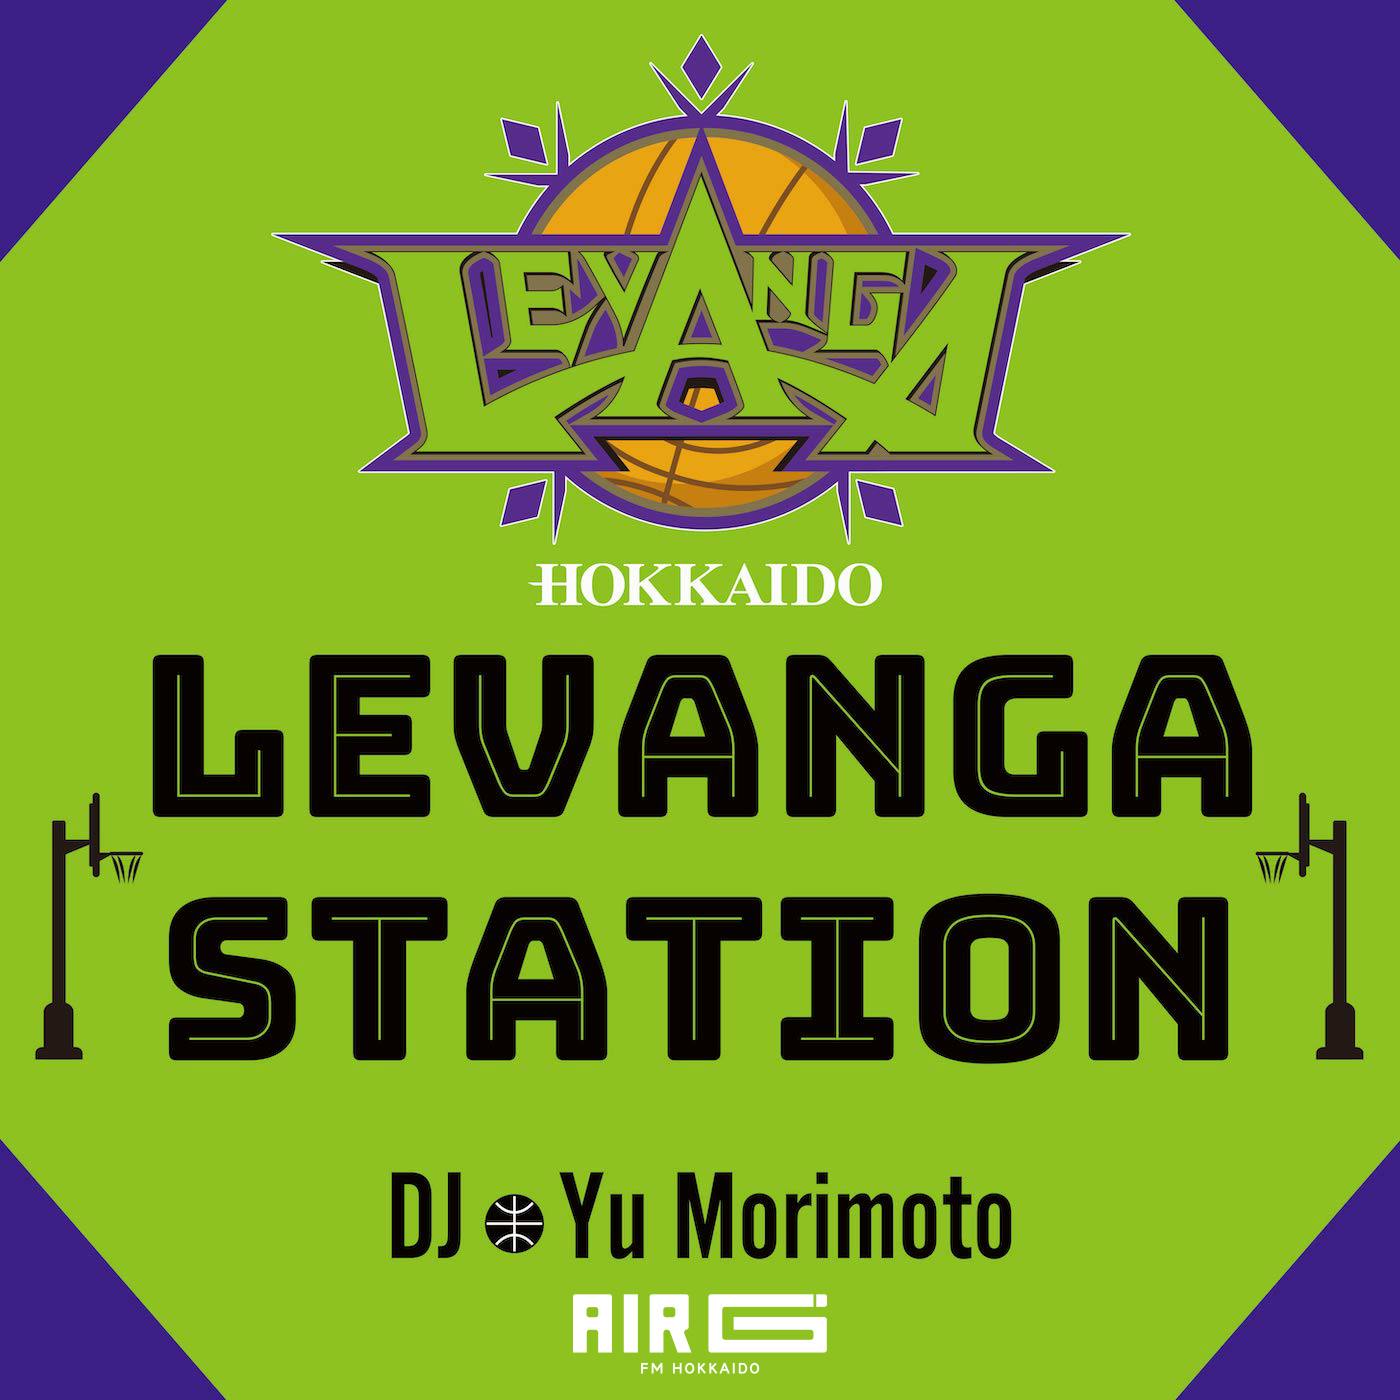 LEVANGA STATION